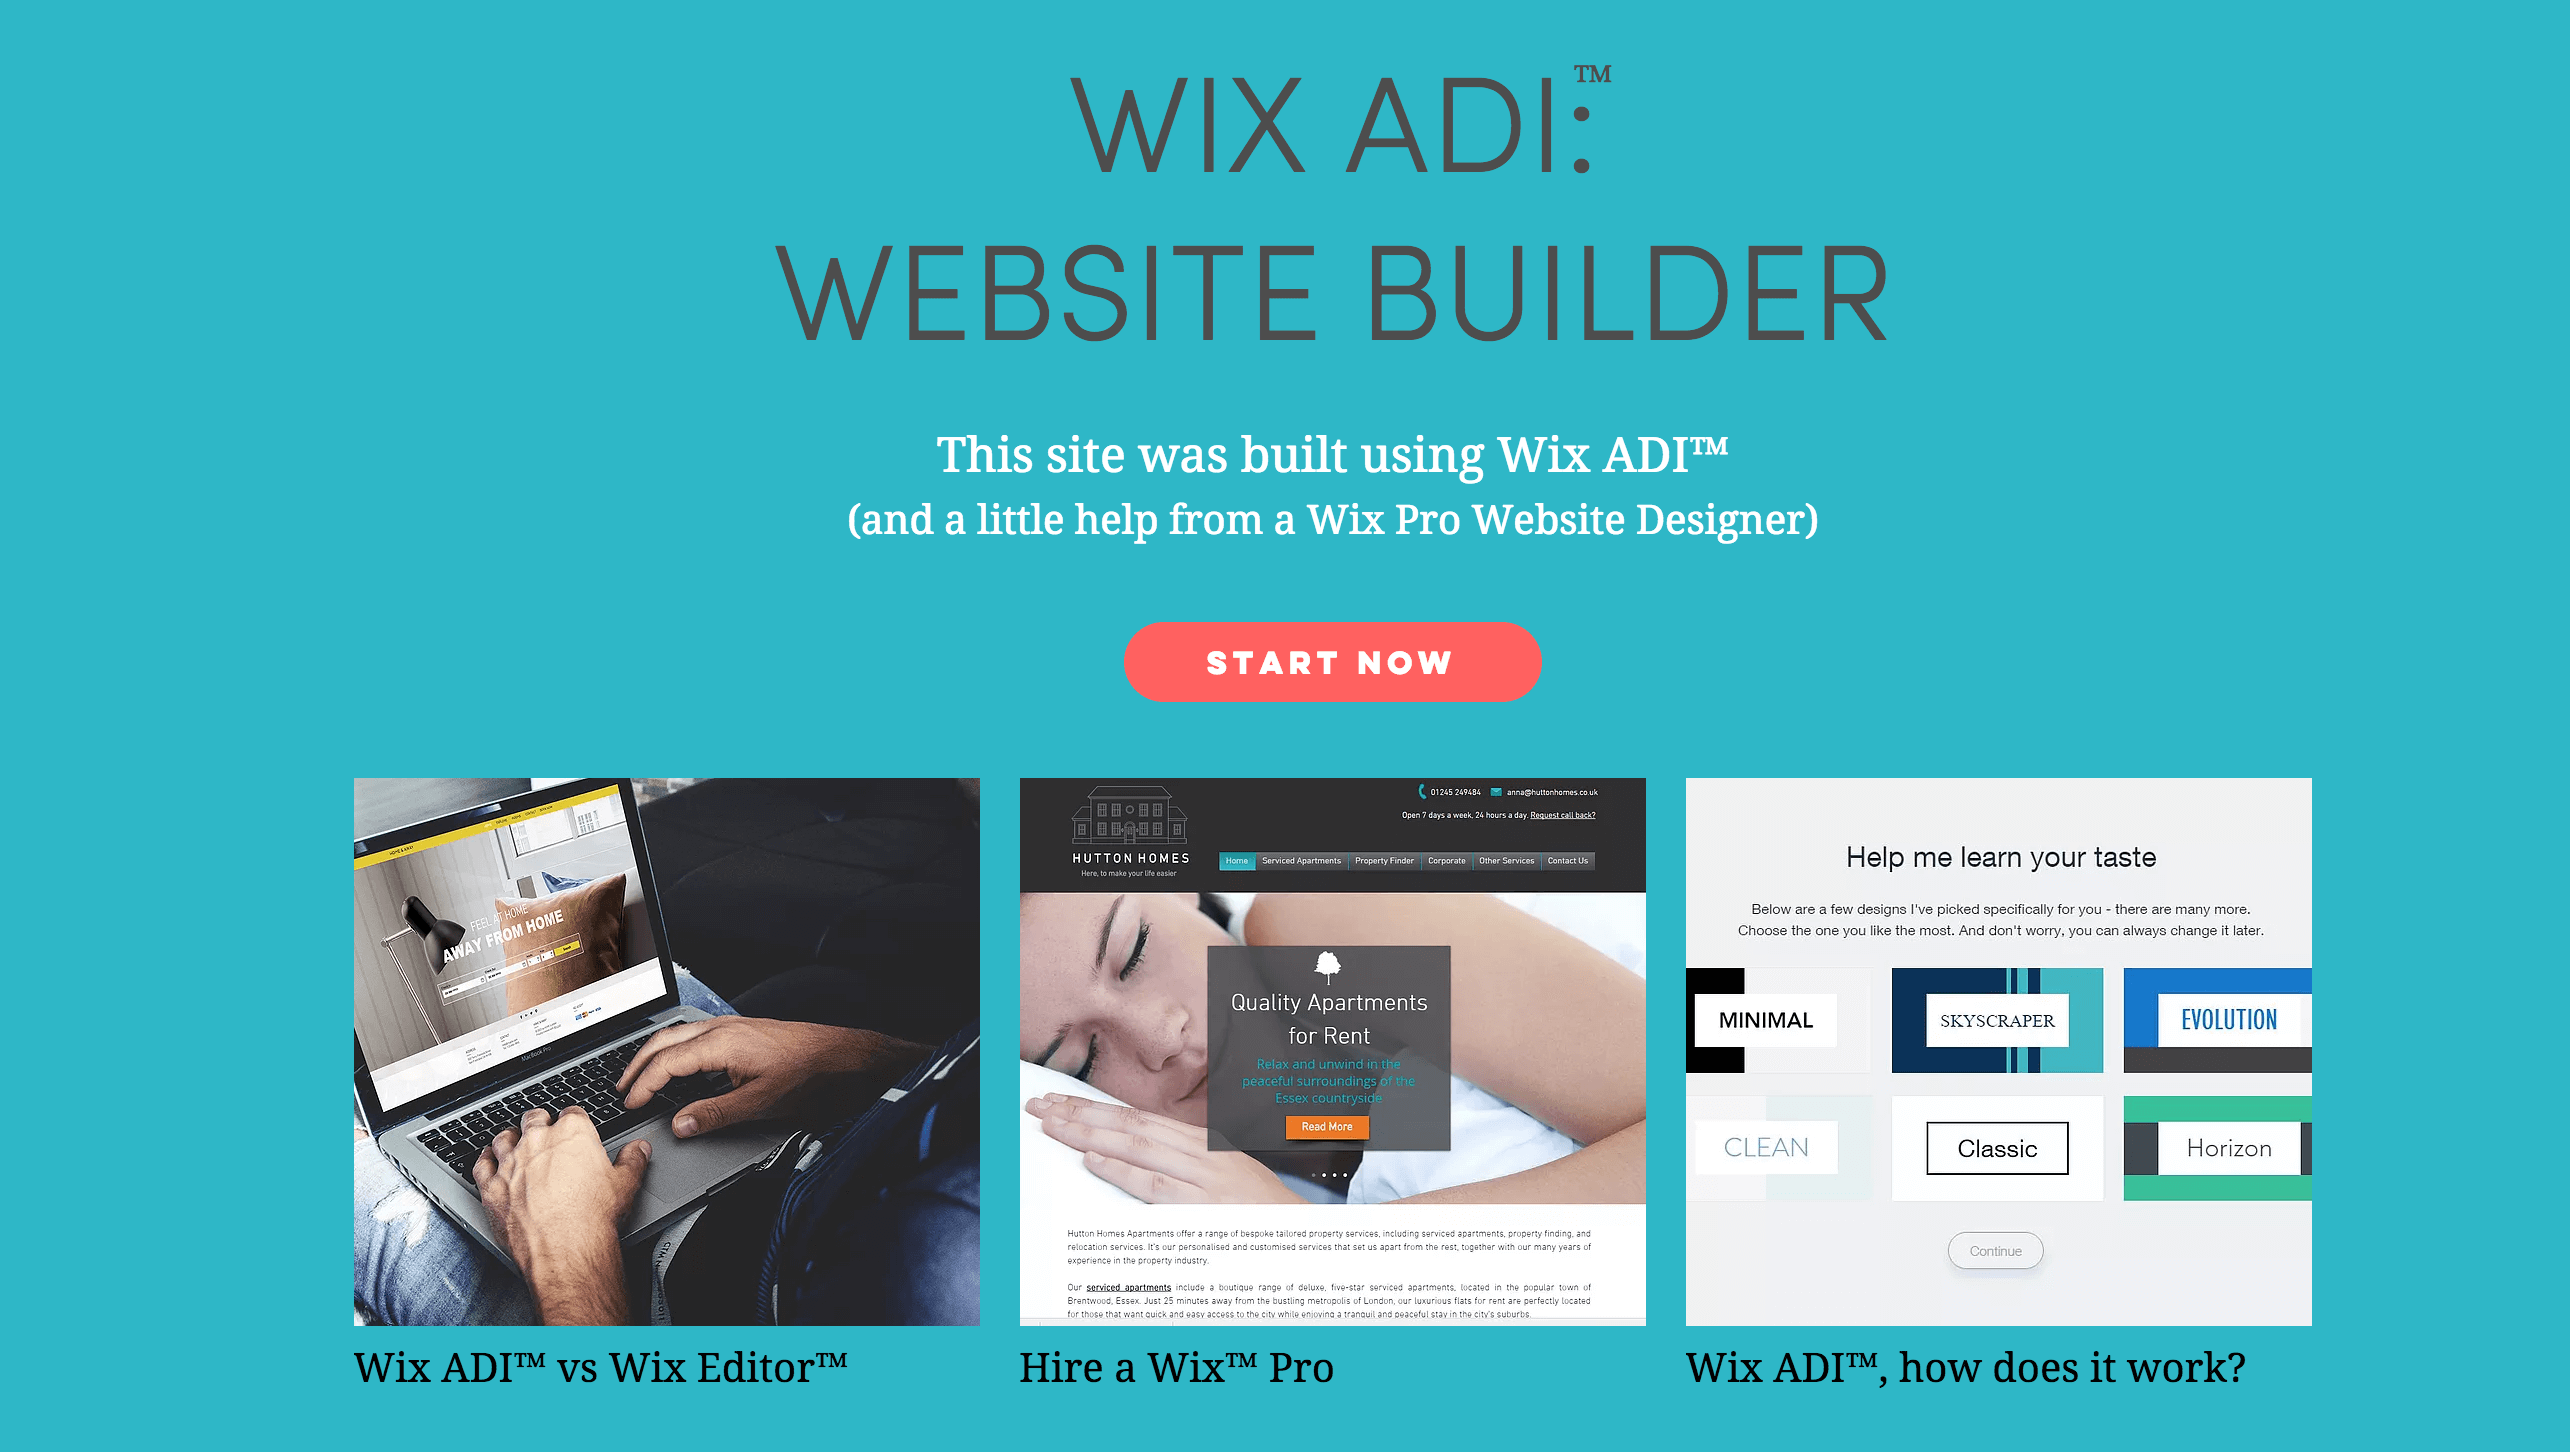 A website created using Wix ADI.